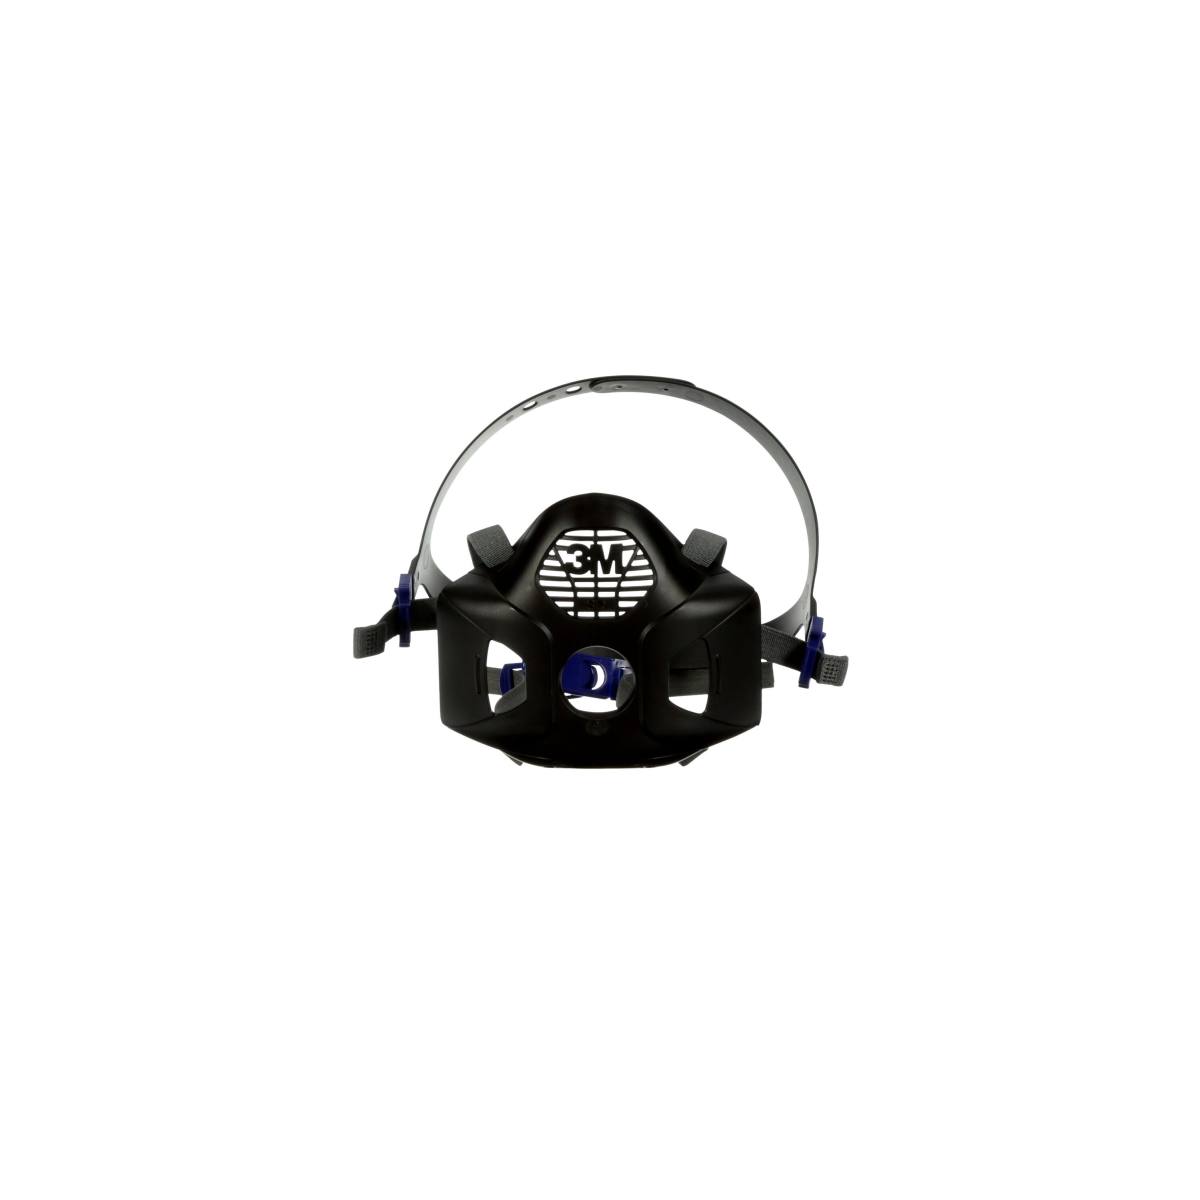 3M Secure Click Headband SD version (speech diaphragm version) HF-800-04